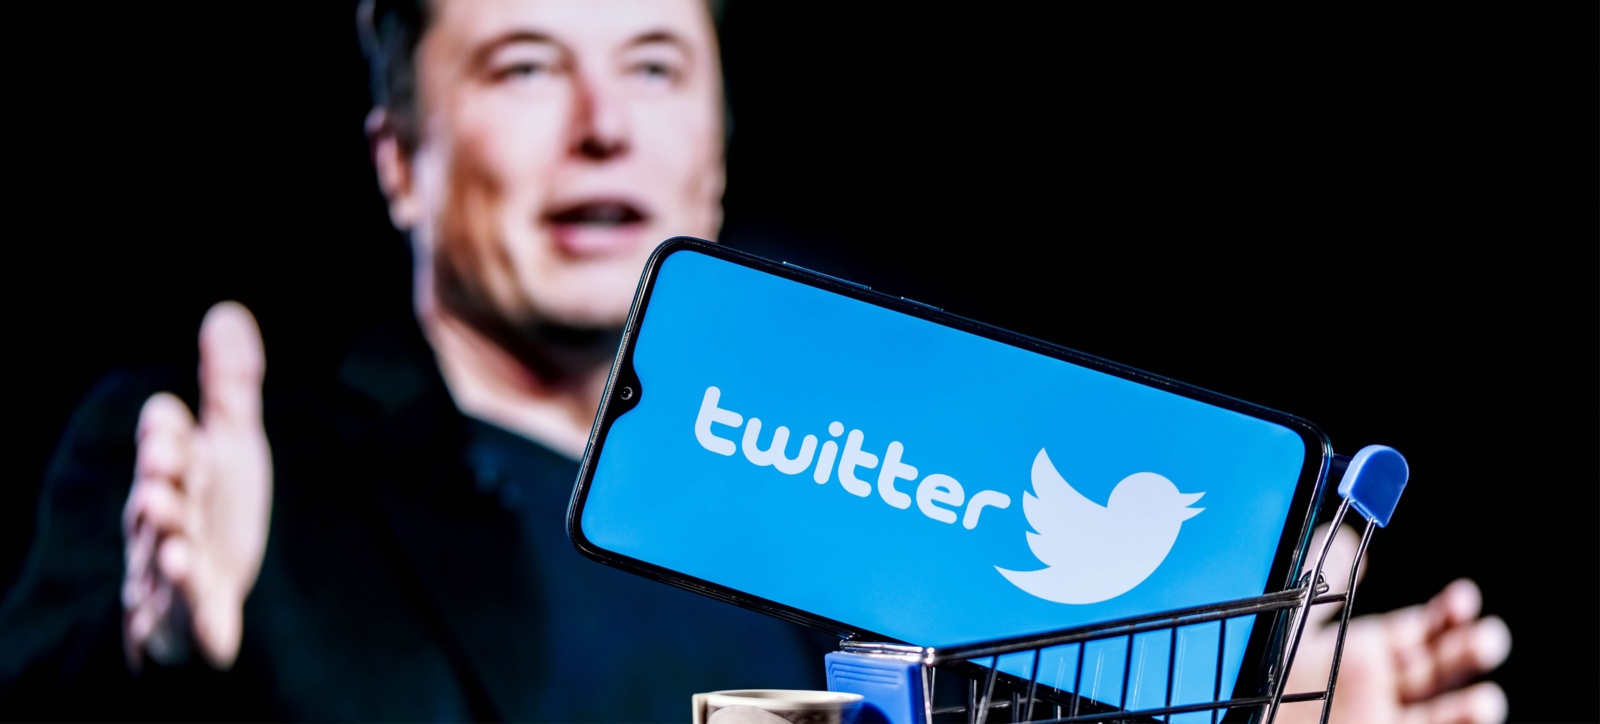 Why Elon Musk needs more regulation to set Twitter free | News Warwick Business School